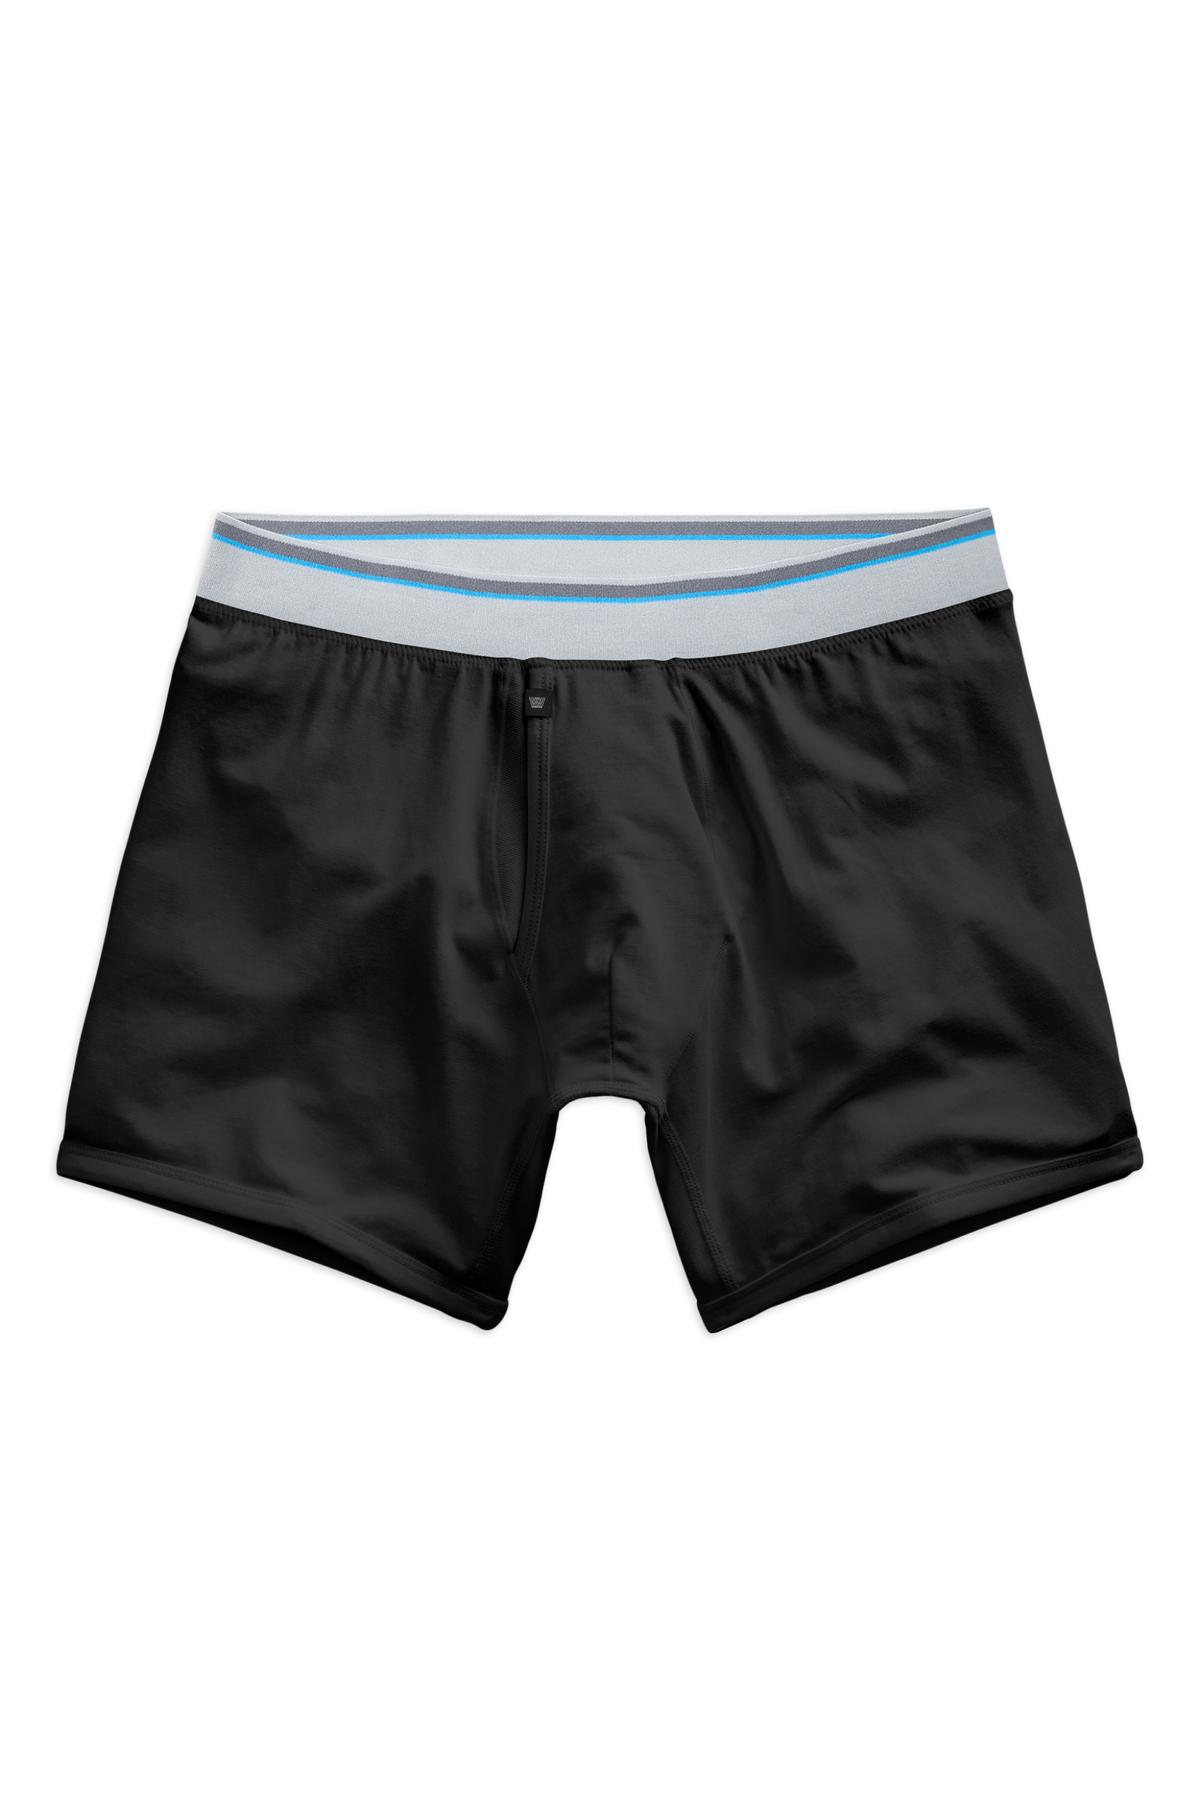 Undershirts & Underwear – Seattle Thread Company